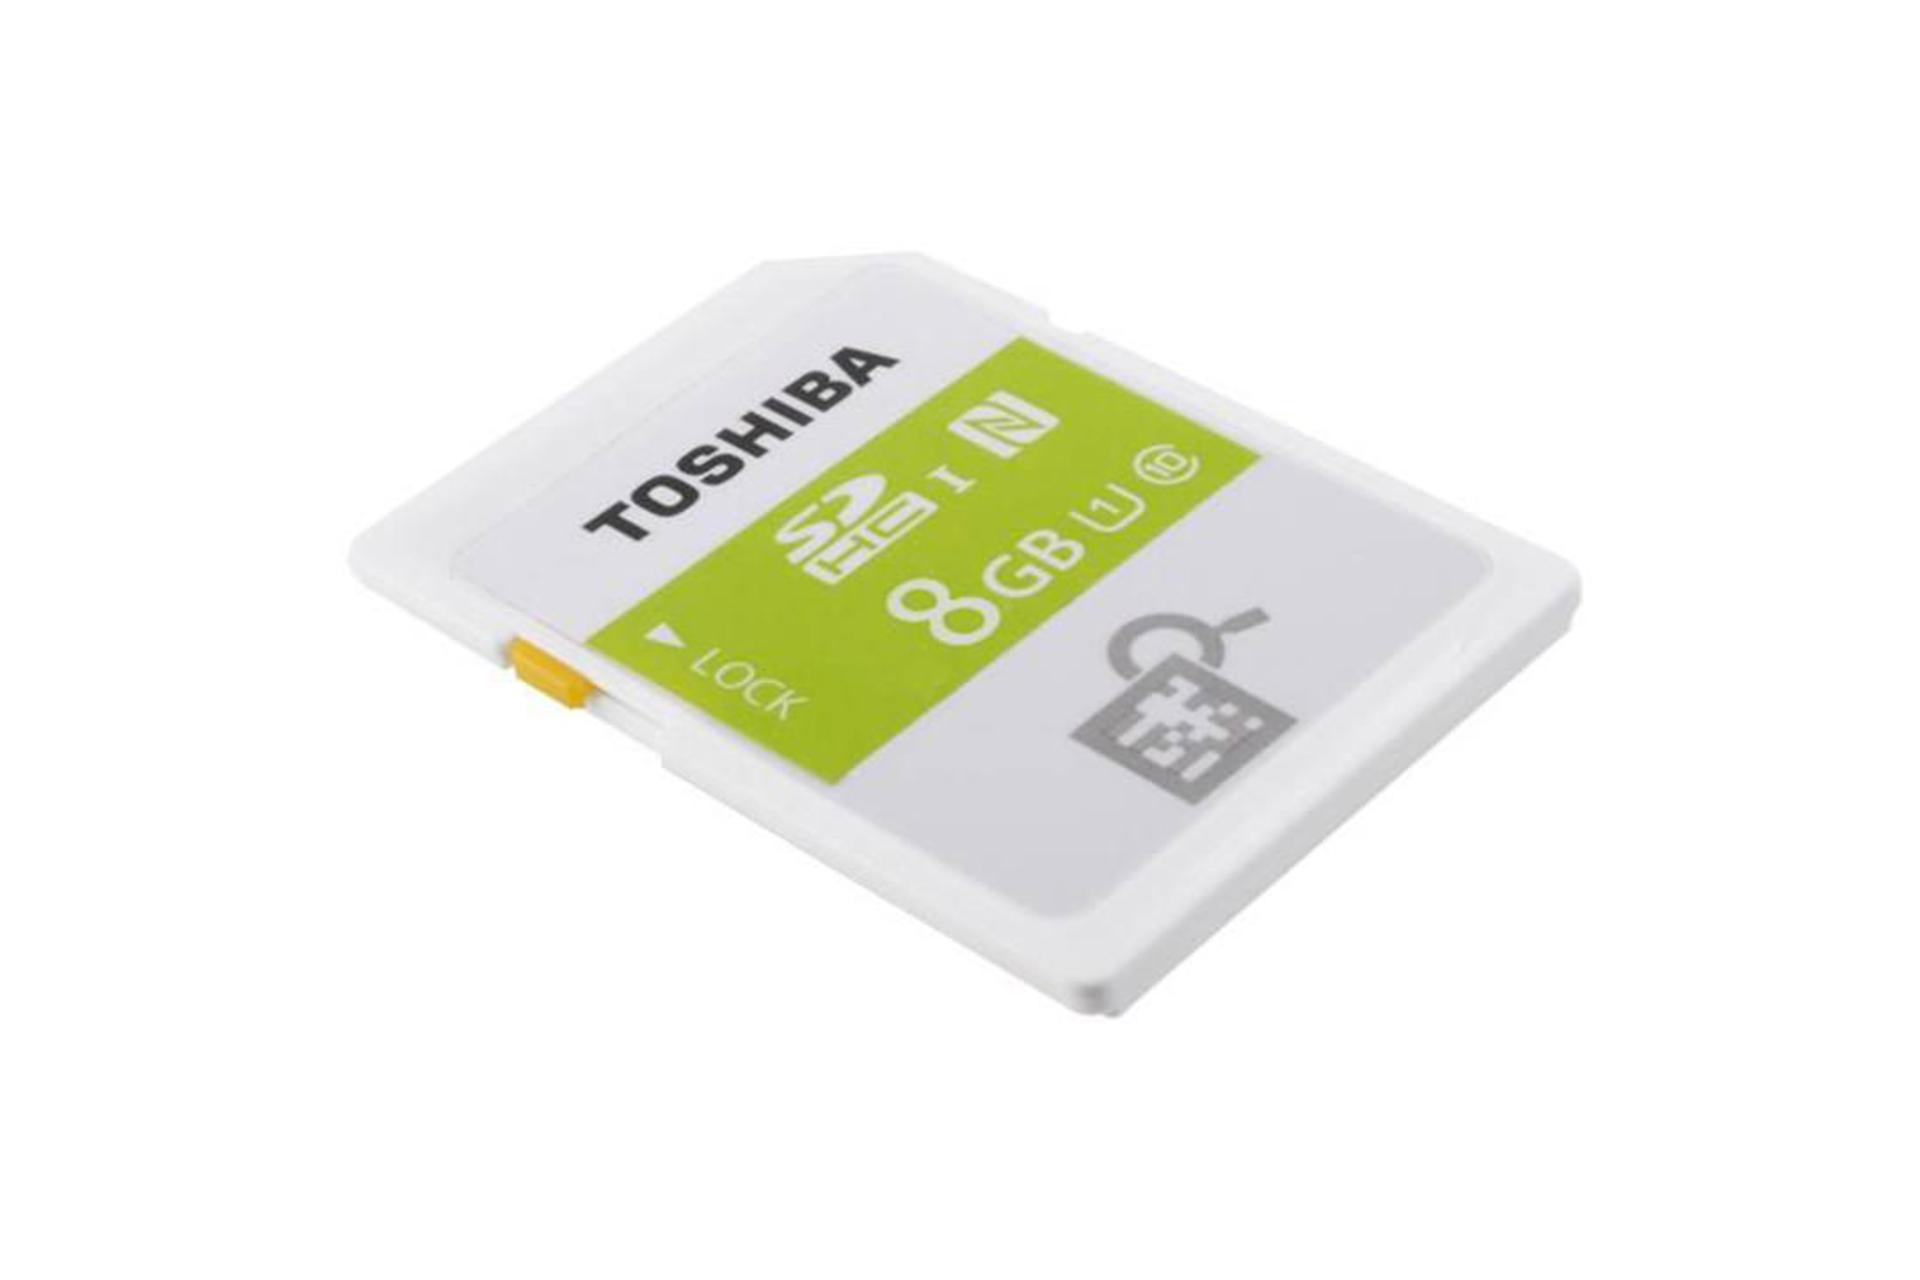 Toshiba NFC High Speed Professional SDHC Class 10 UHS-I U1 8GB